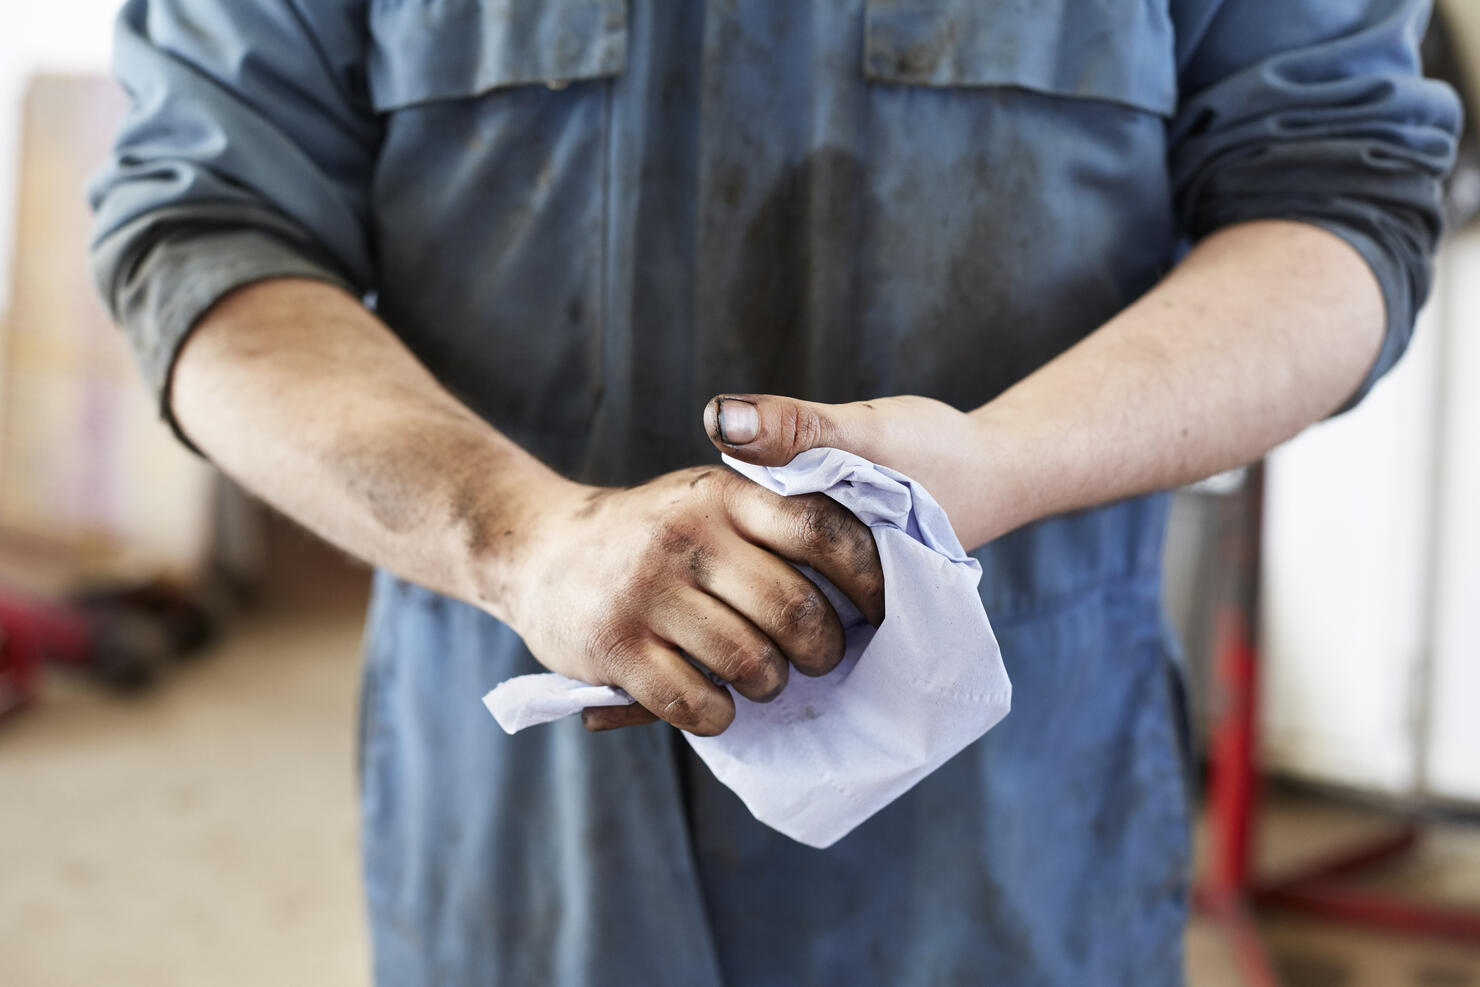 Garage mechanic cleaning hands